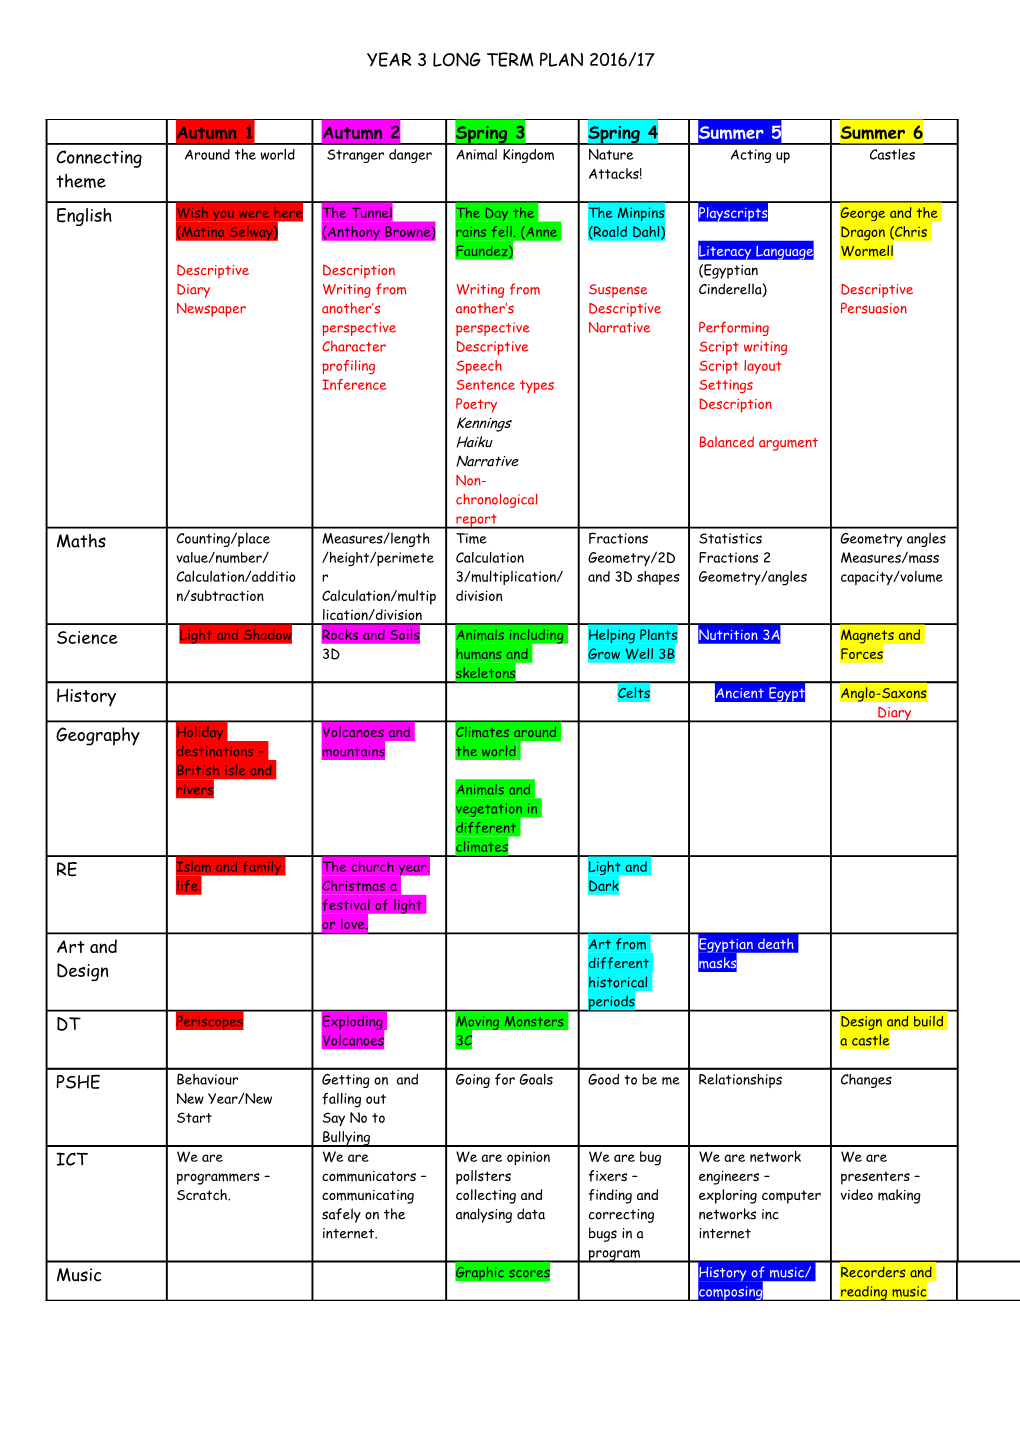 Year 3 Long Term Plan 2012 - 2013